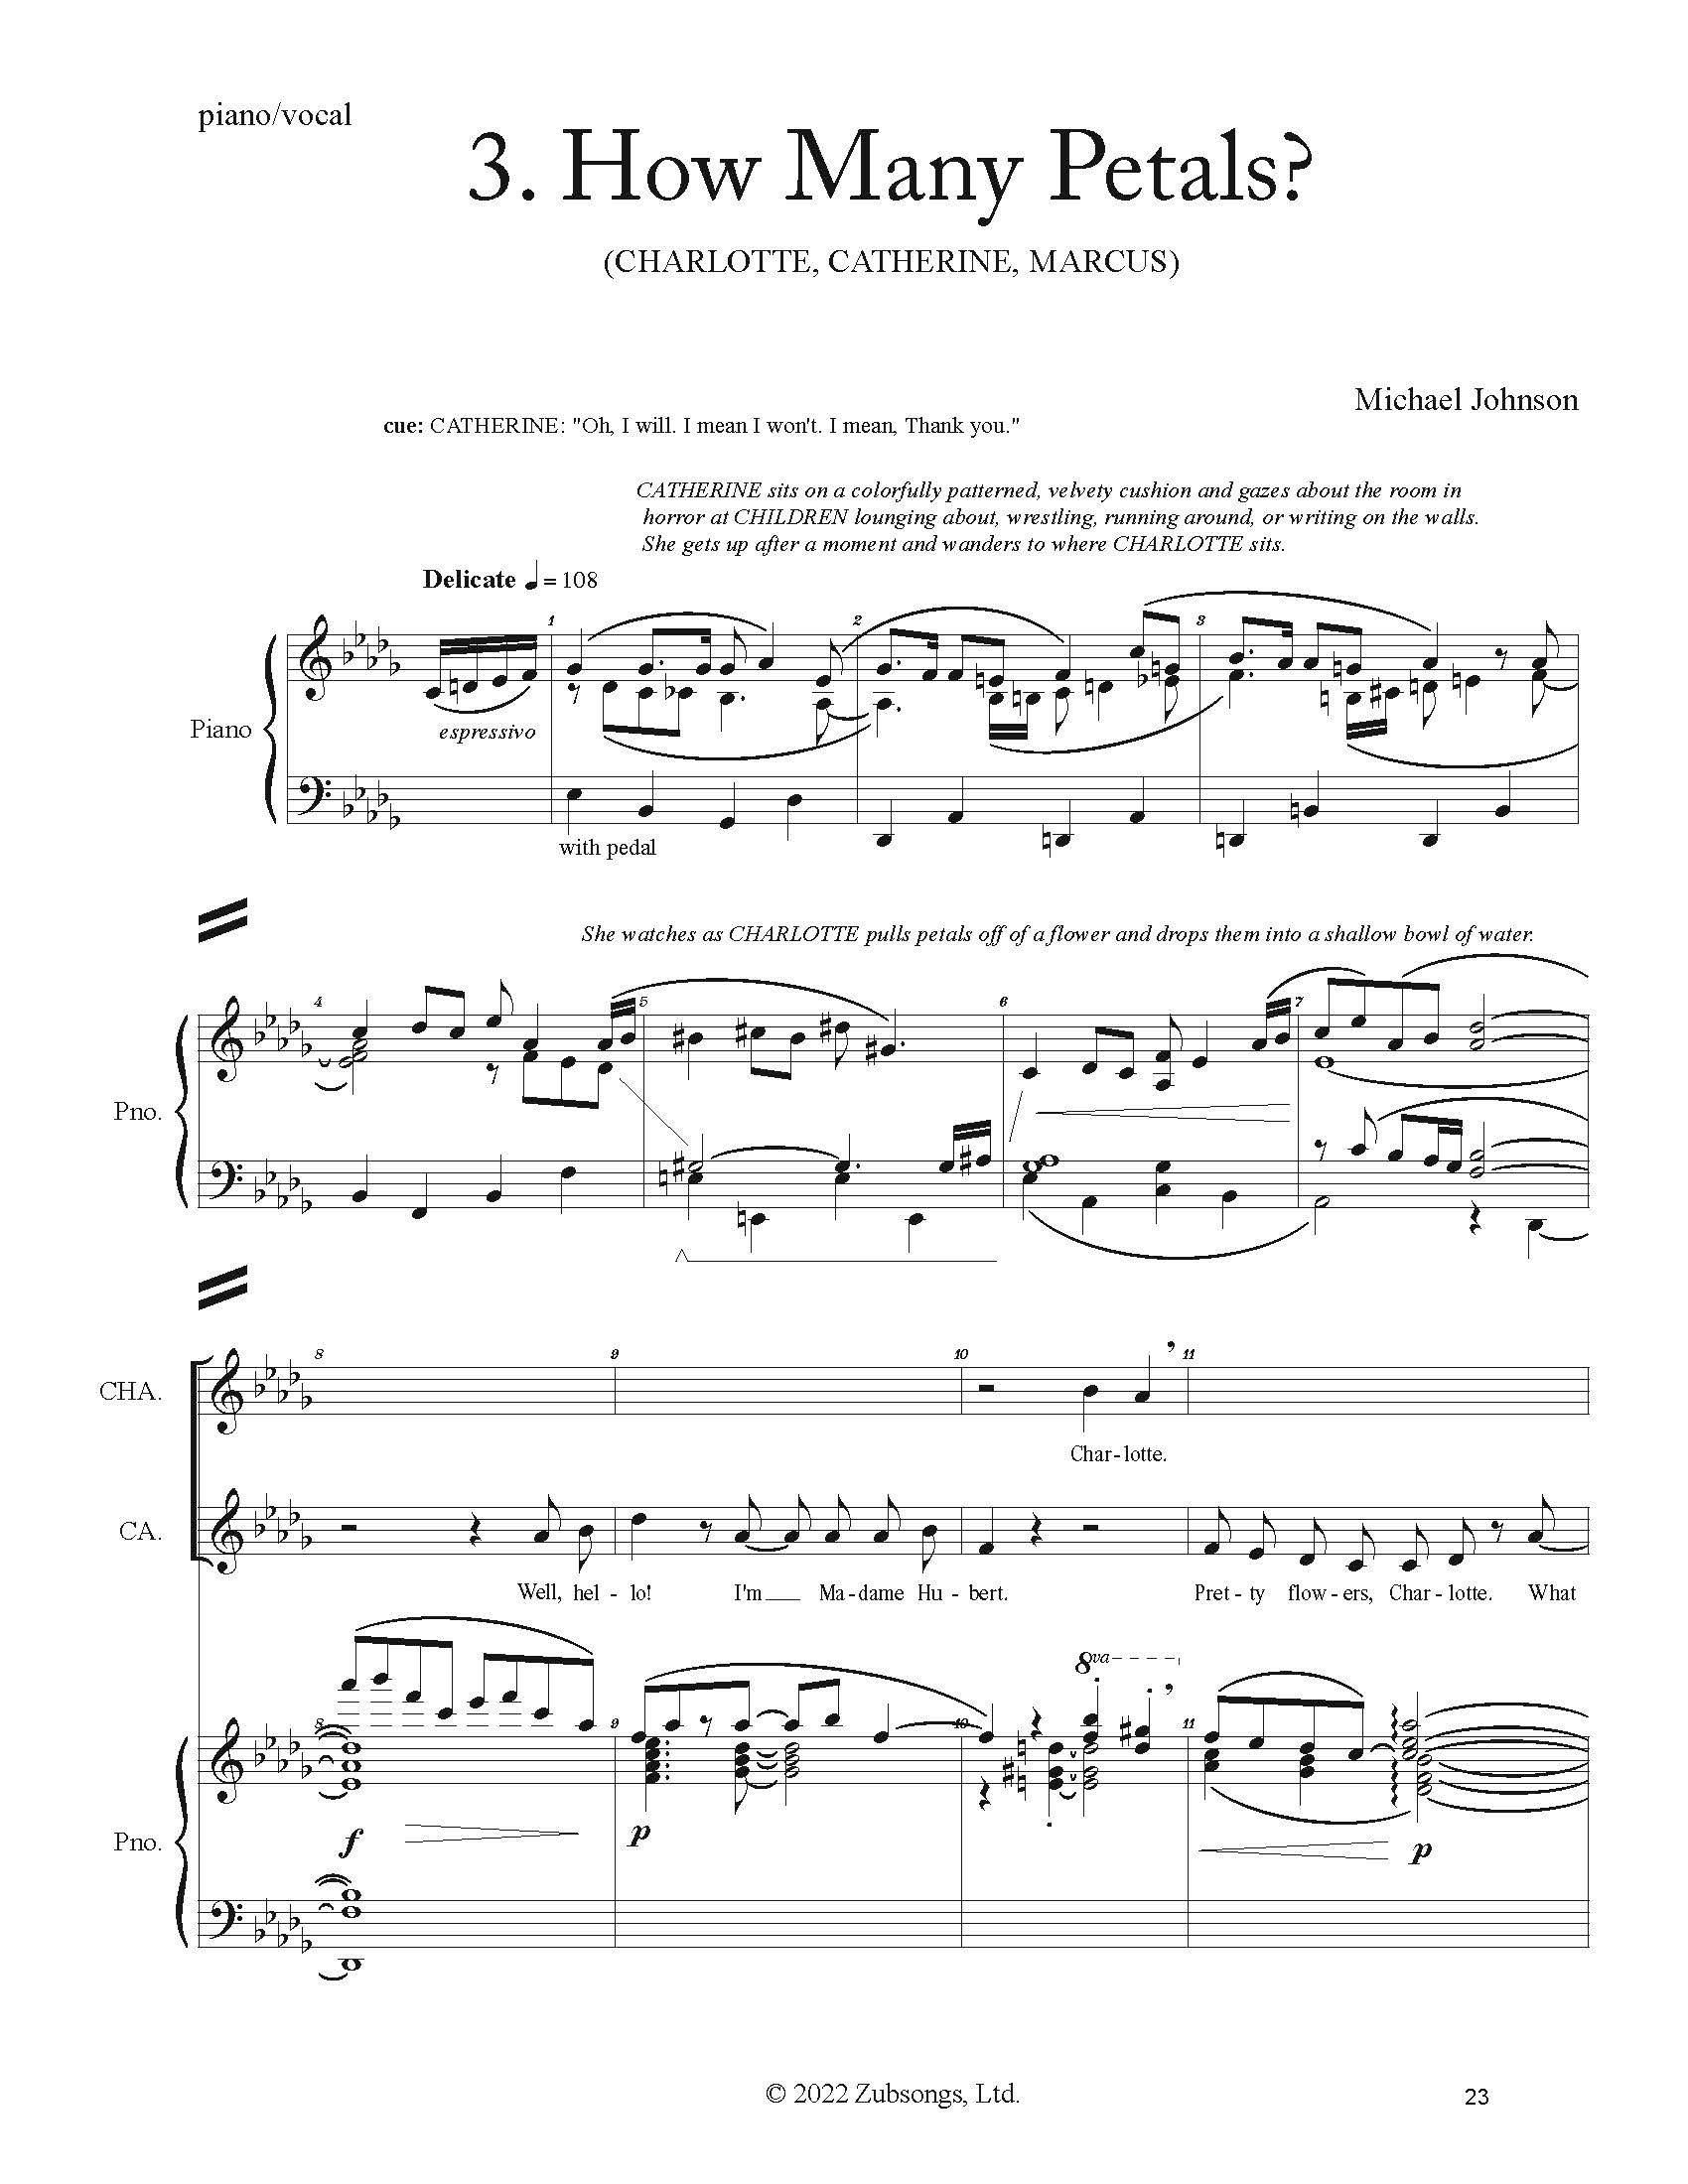 FULL PIANO VOCAL SCORE DRAFT 1 - Score_Page_023.jpg